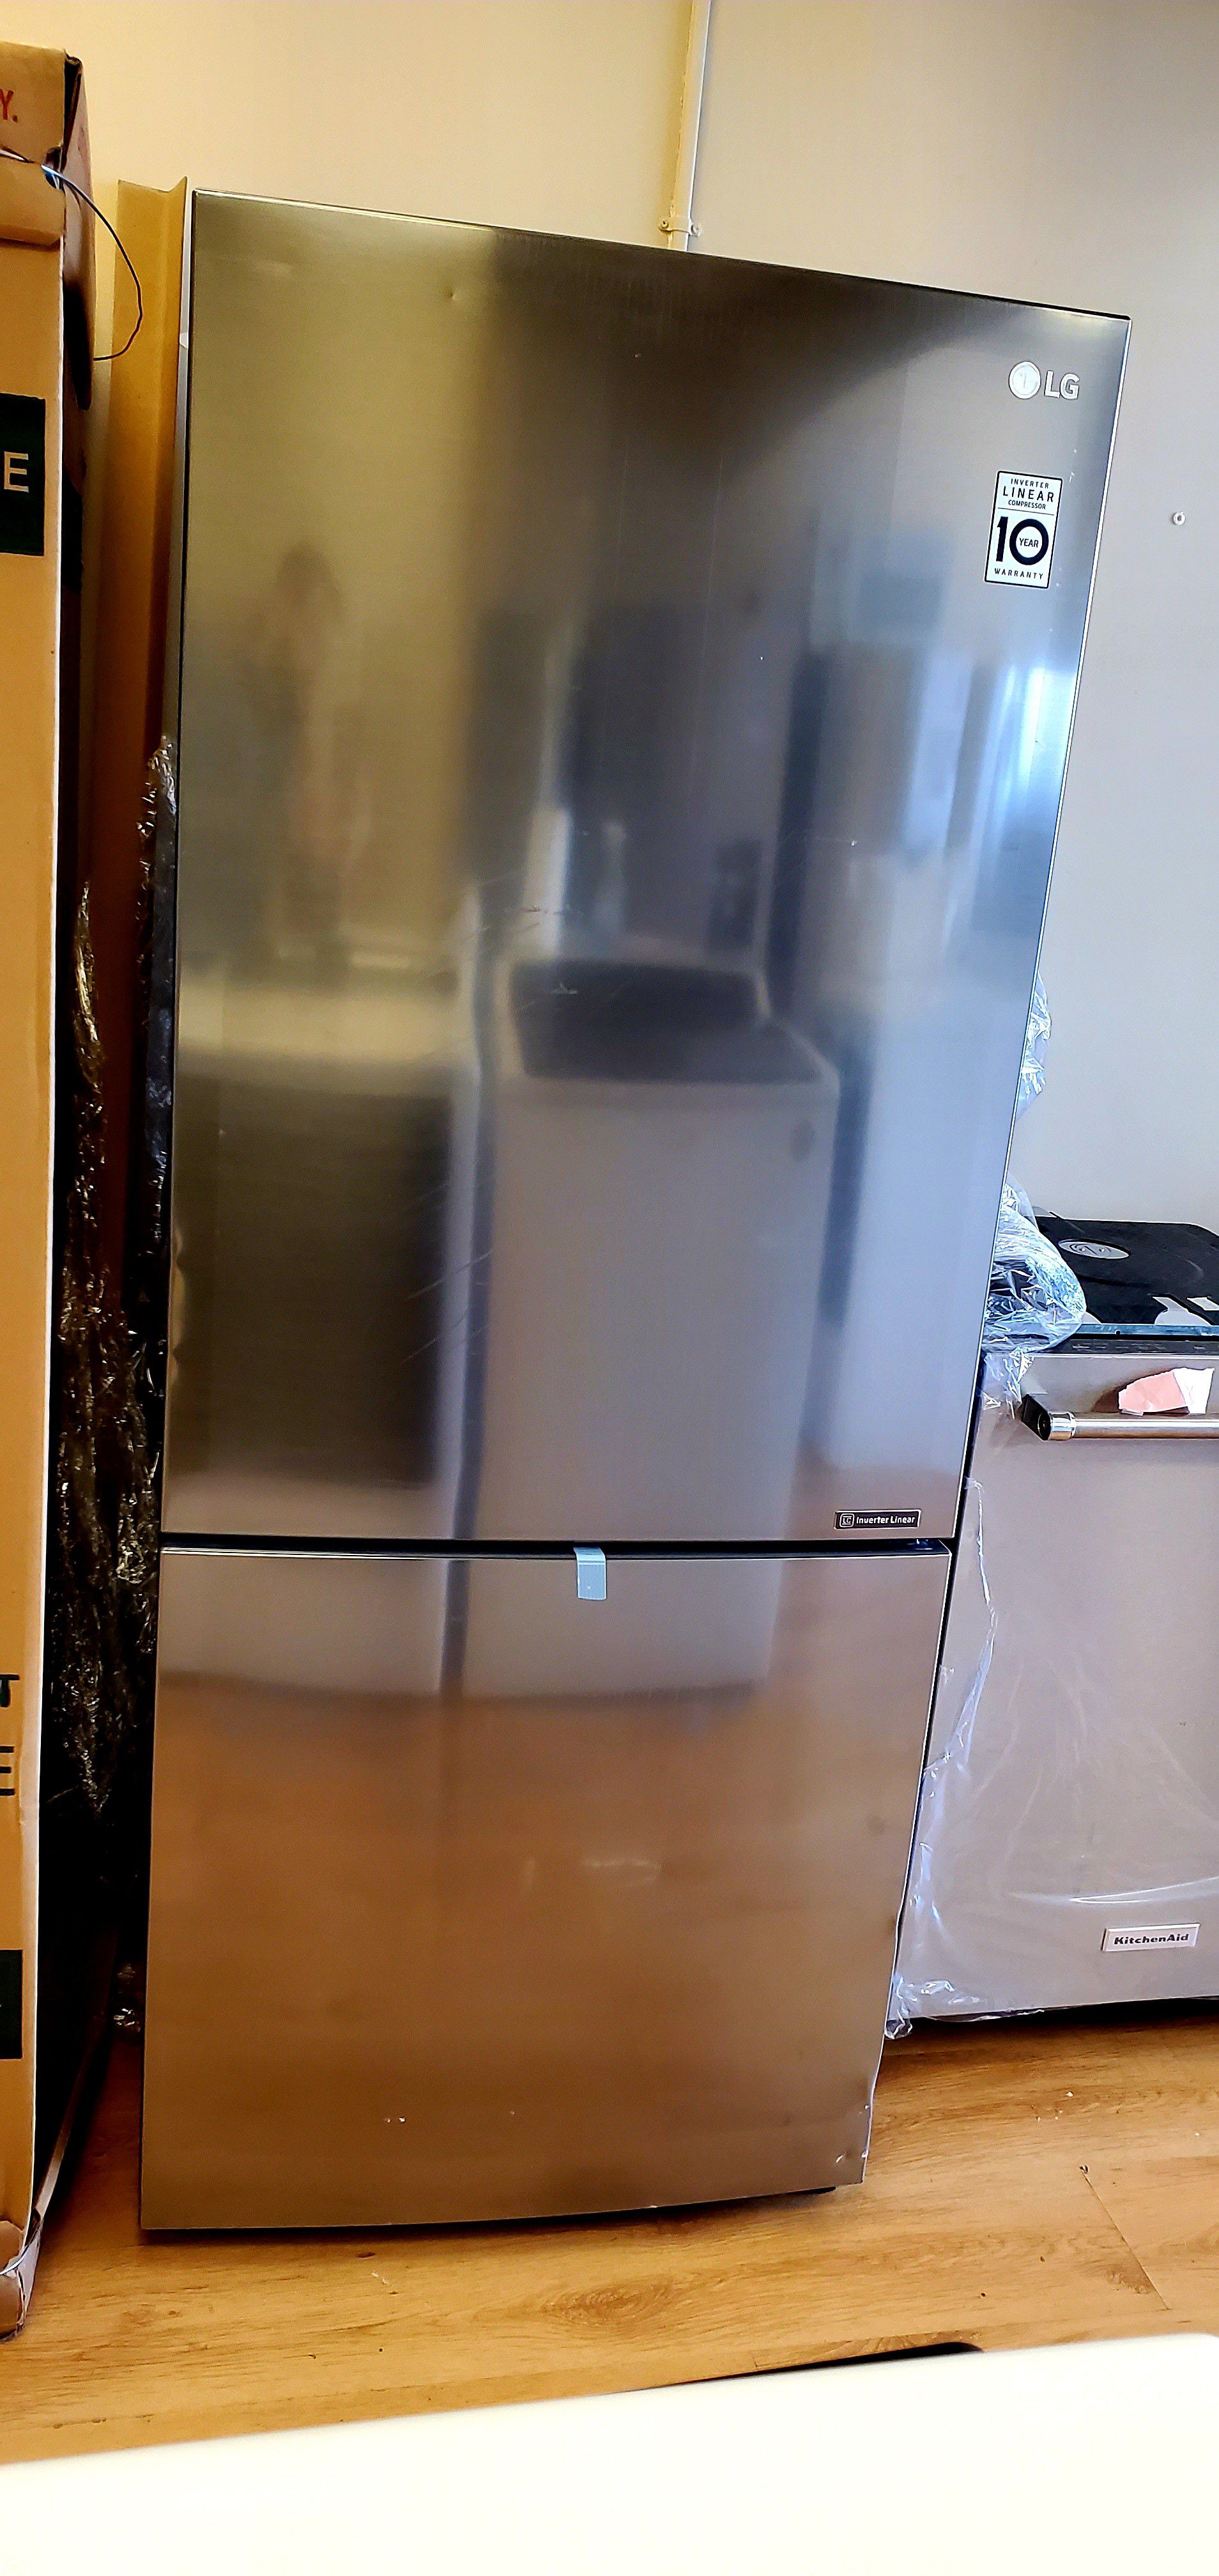 Brand new! LG refrigerator!